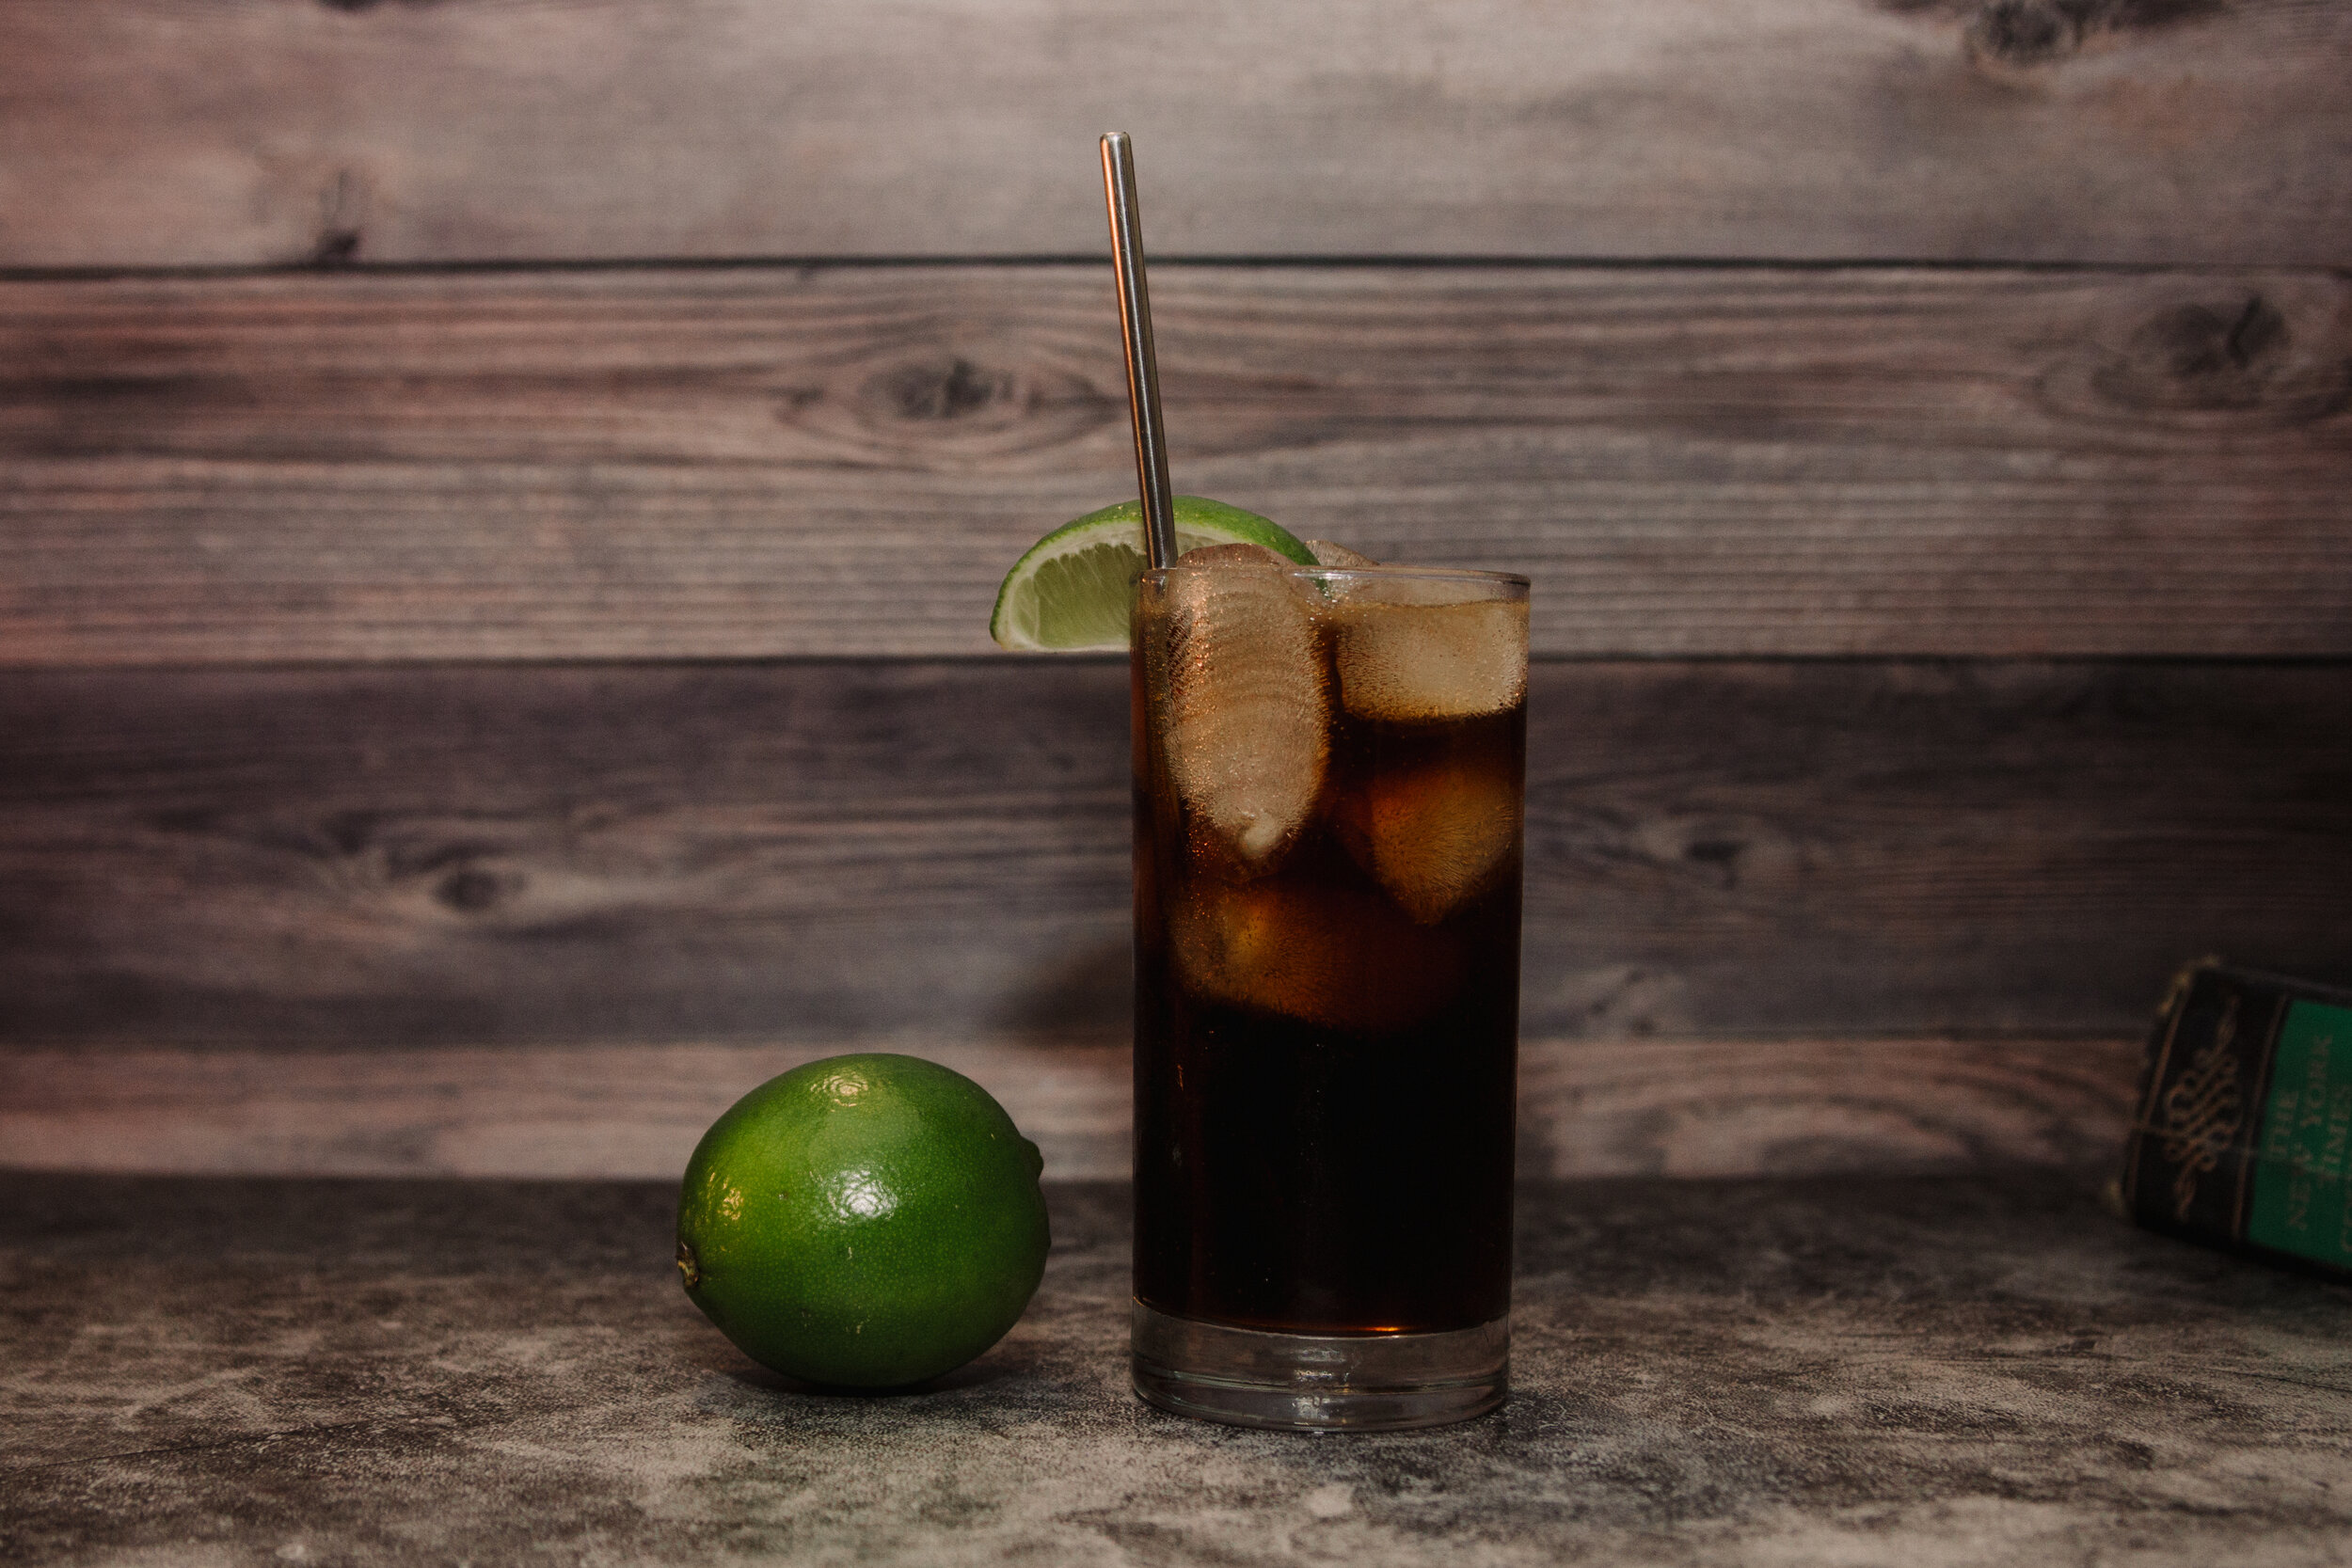 Best Cuba Libre Drink Recipe - How to Make a Cuban Rum & Coke